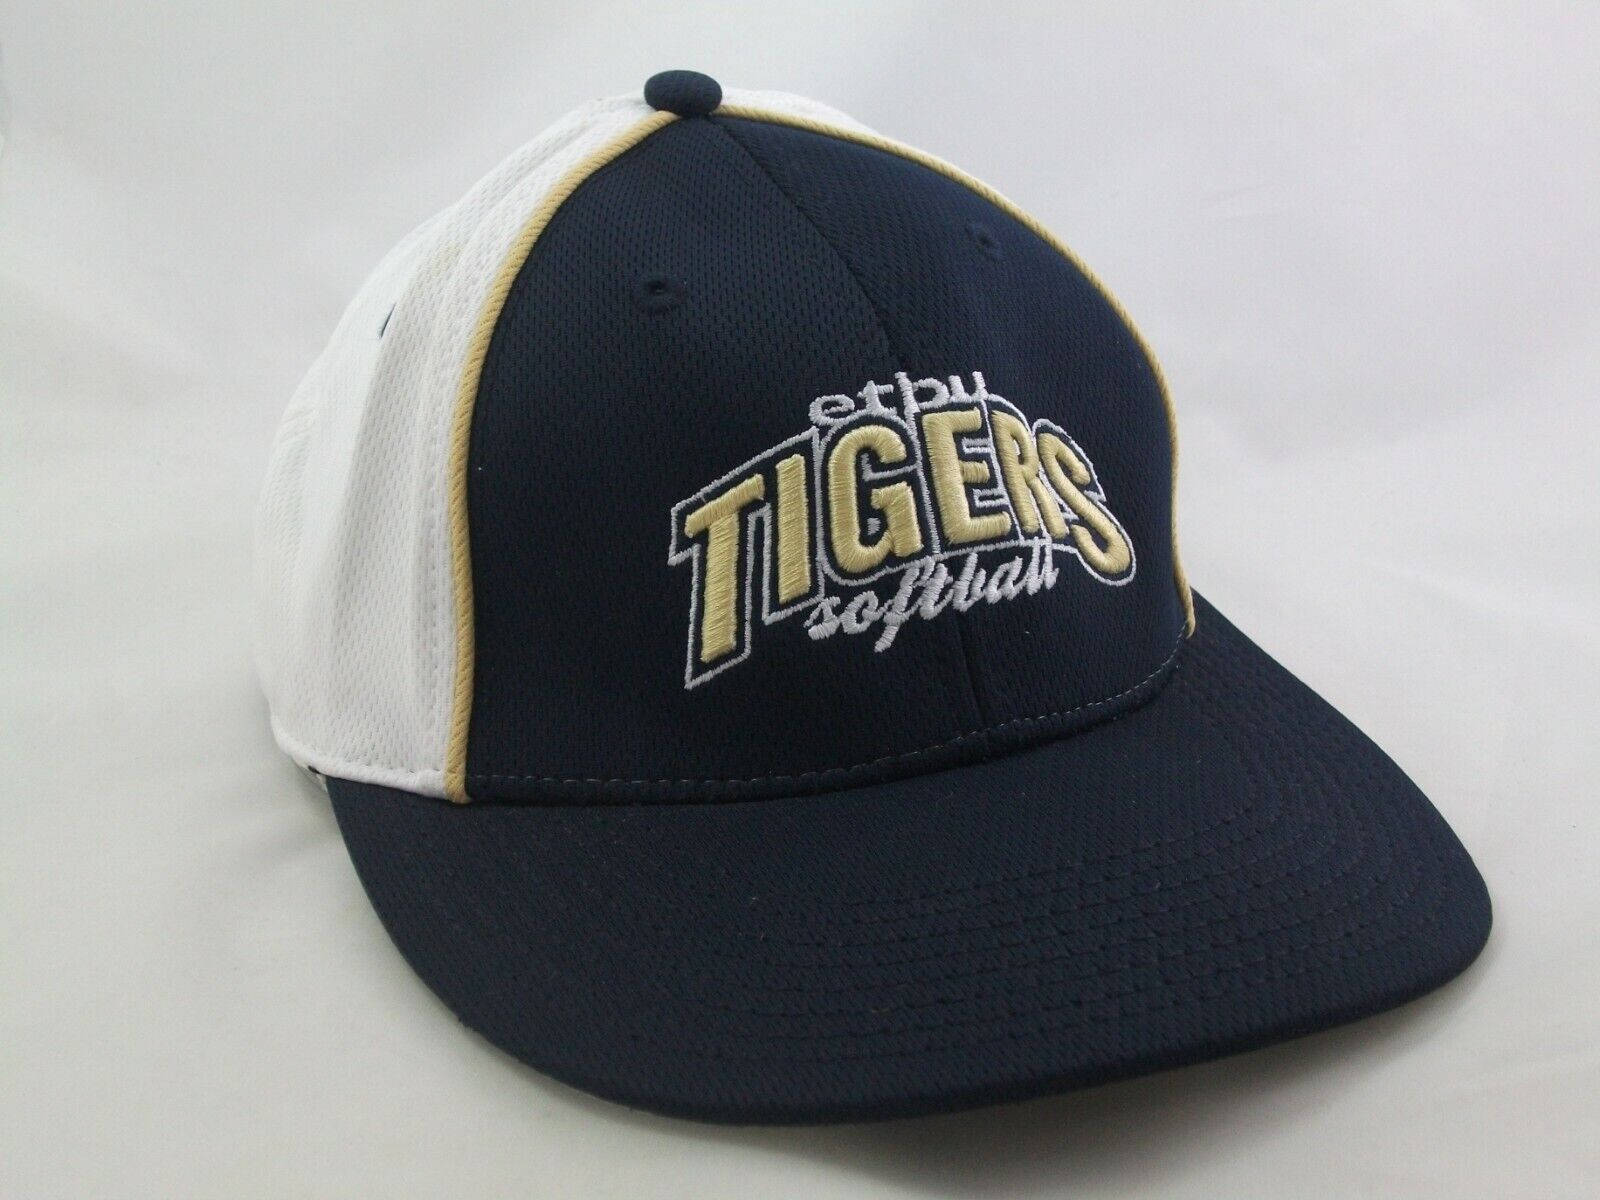 ETBU Tigers Softball Hat The Game Blue White Baseball Cap w/ Tag